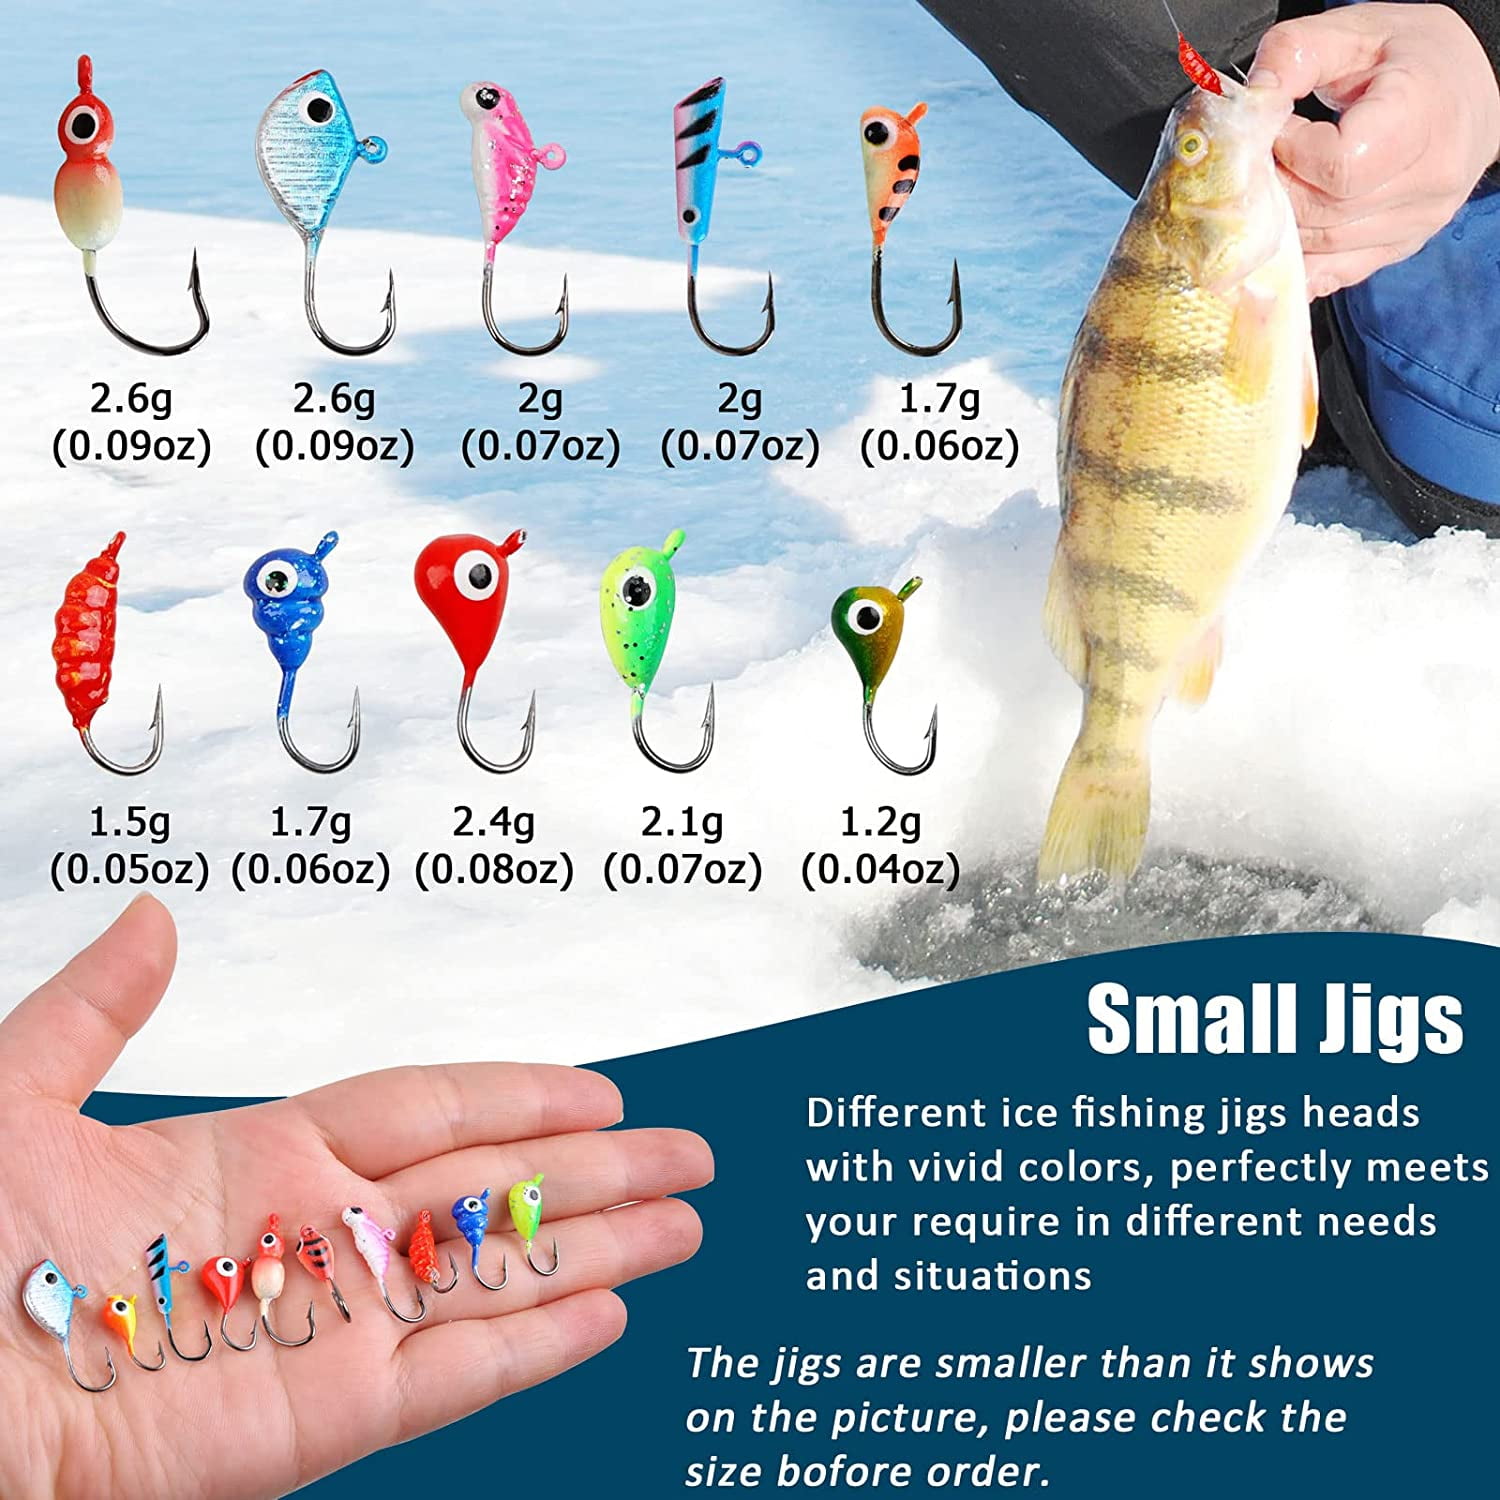 Ice Fishing Jigs Lures kit,48pcs Luminous Ice Fishing Gear Crappie